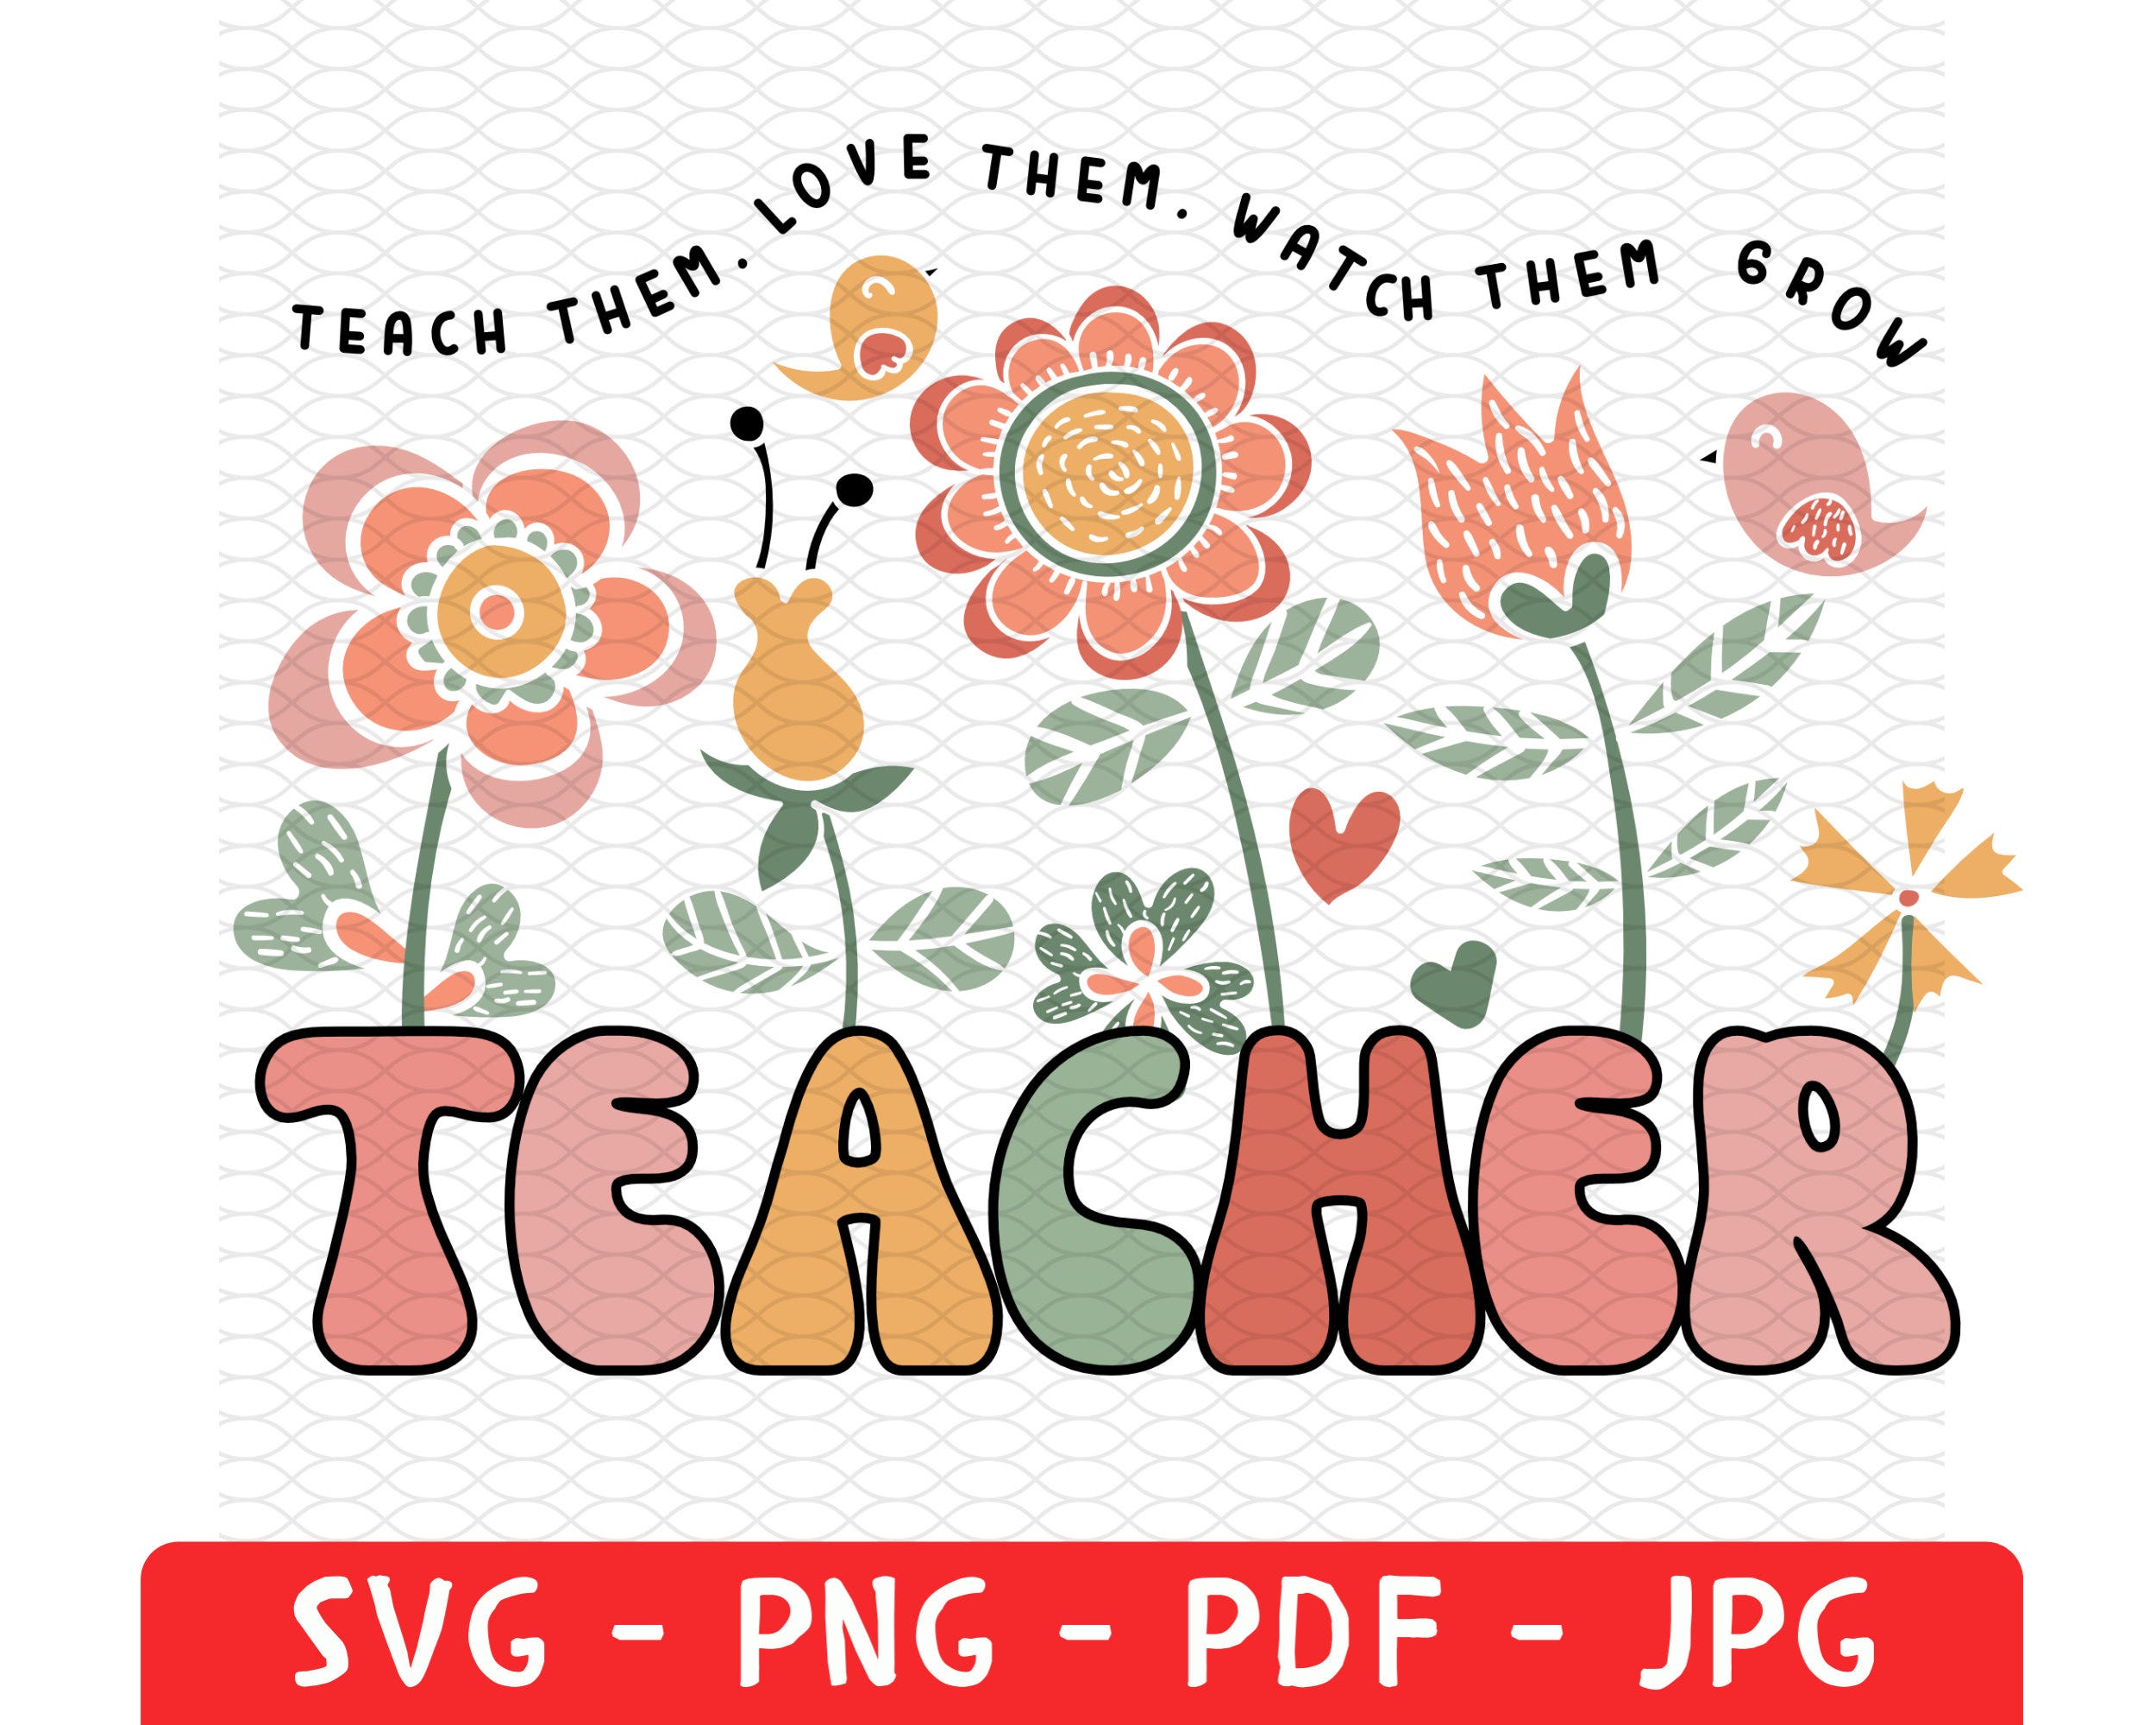 Personalizable Teacher Shirt Png Svg, Teaching Gift, Back to School Gift for Teachers Svg, Teacher Appreciation Gifts, Wildflowers Birds